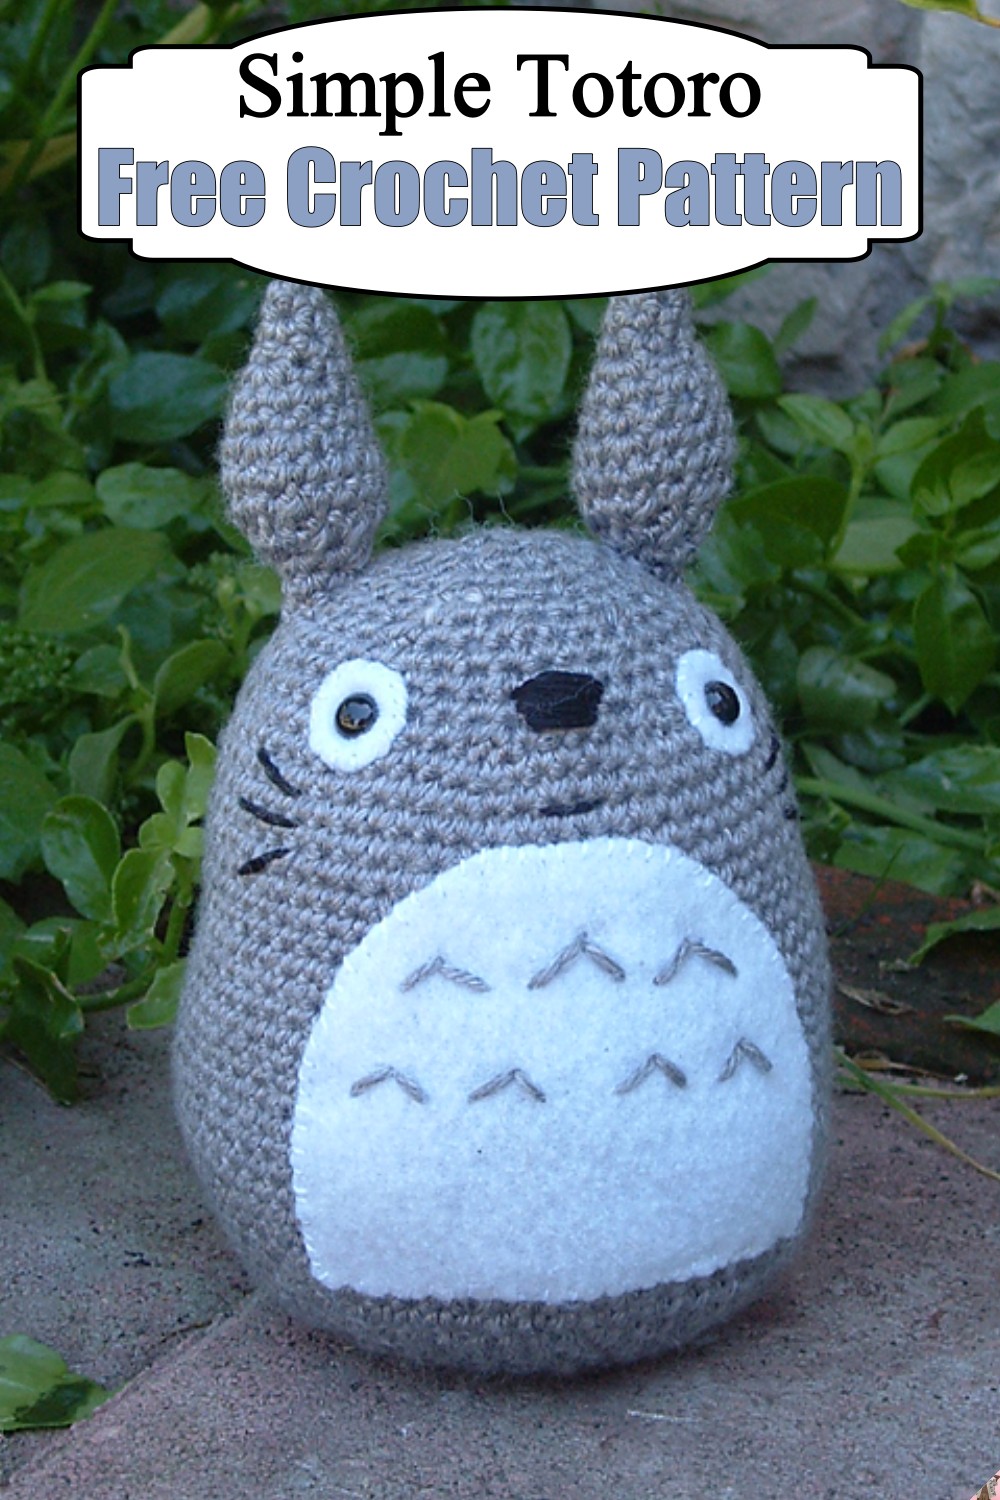 Simple Totoro